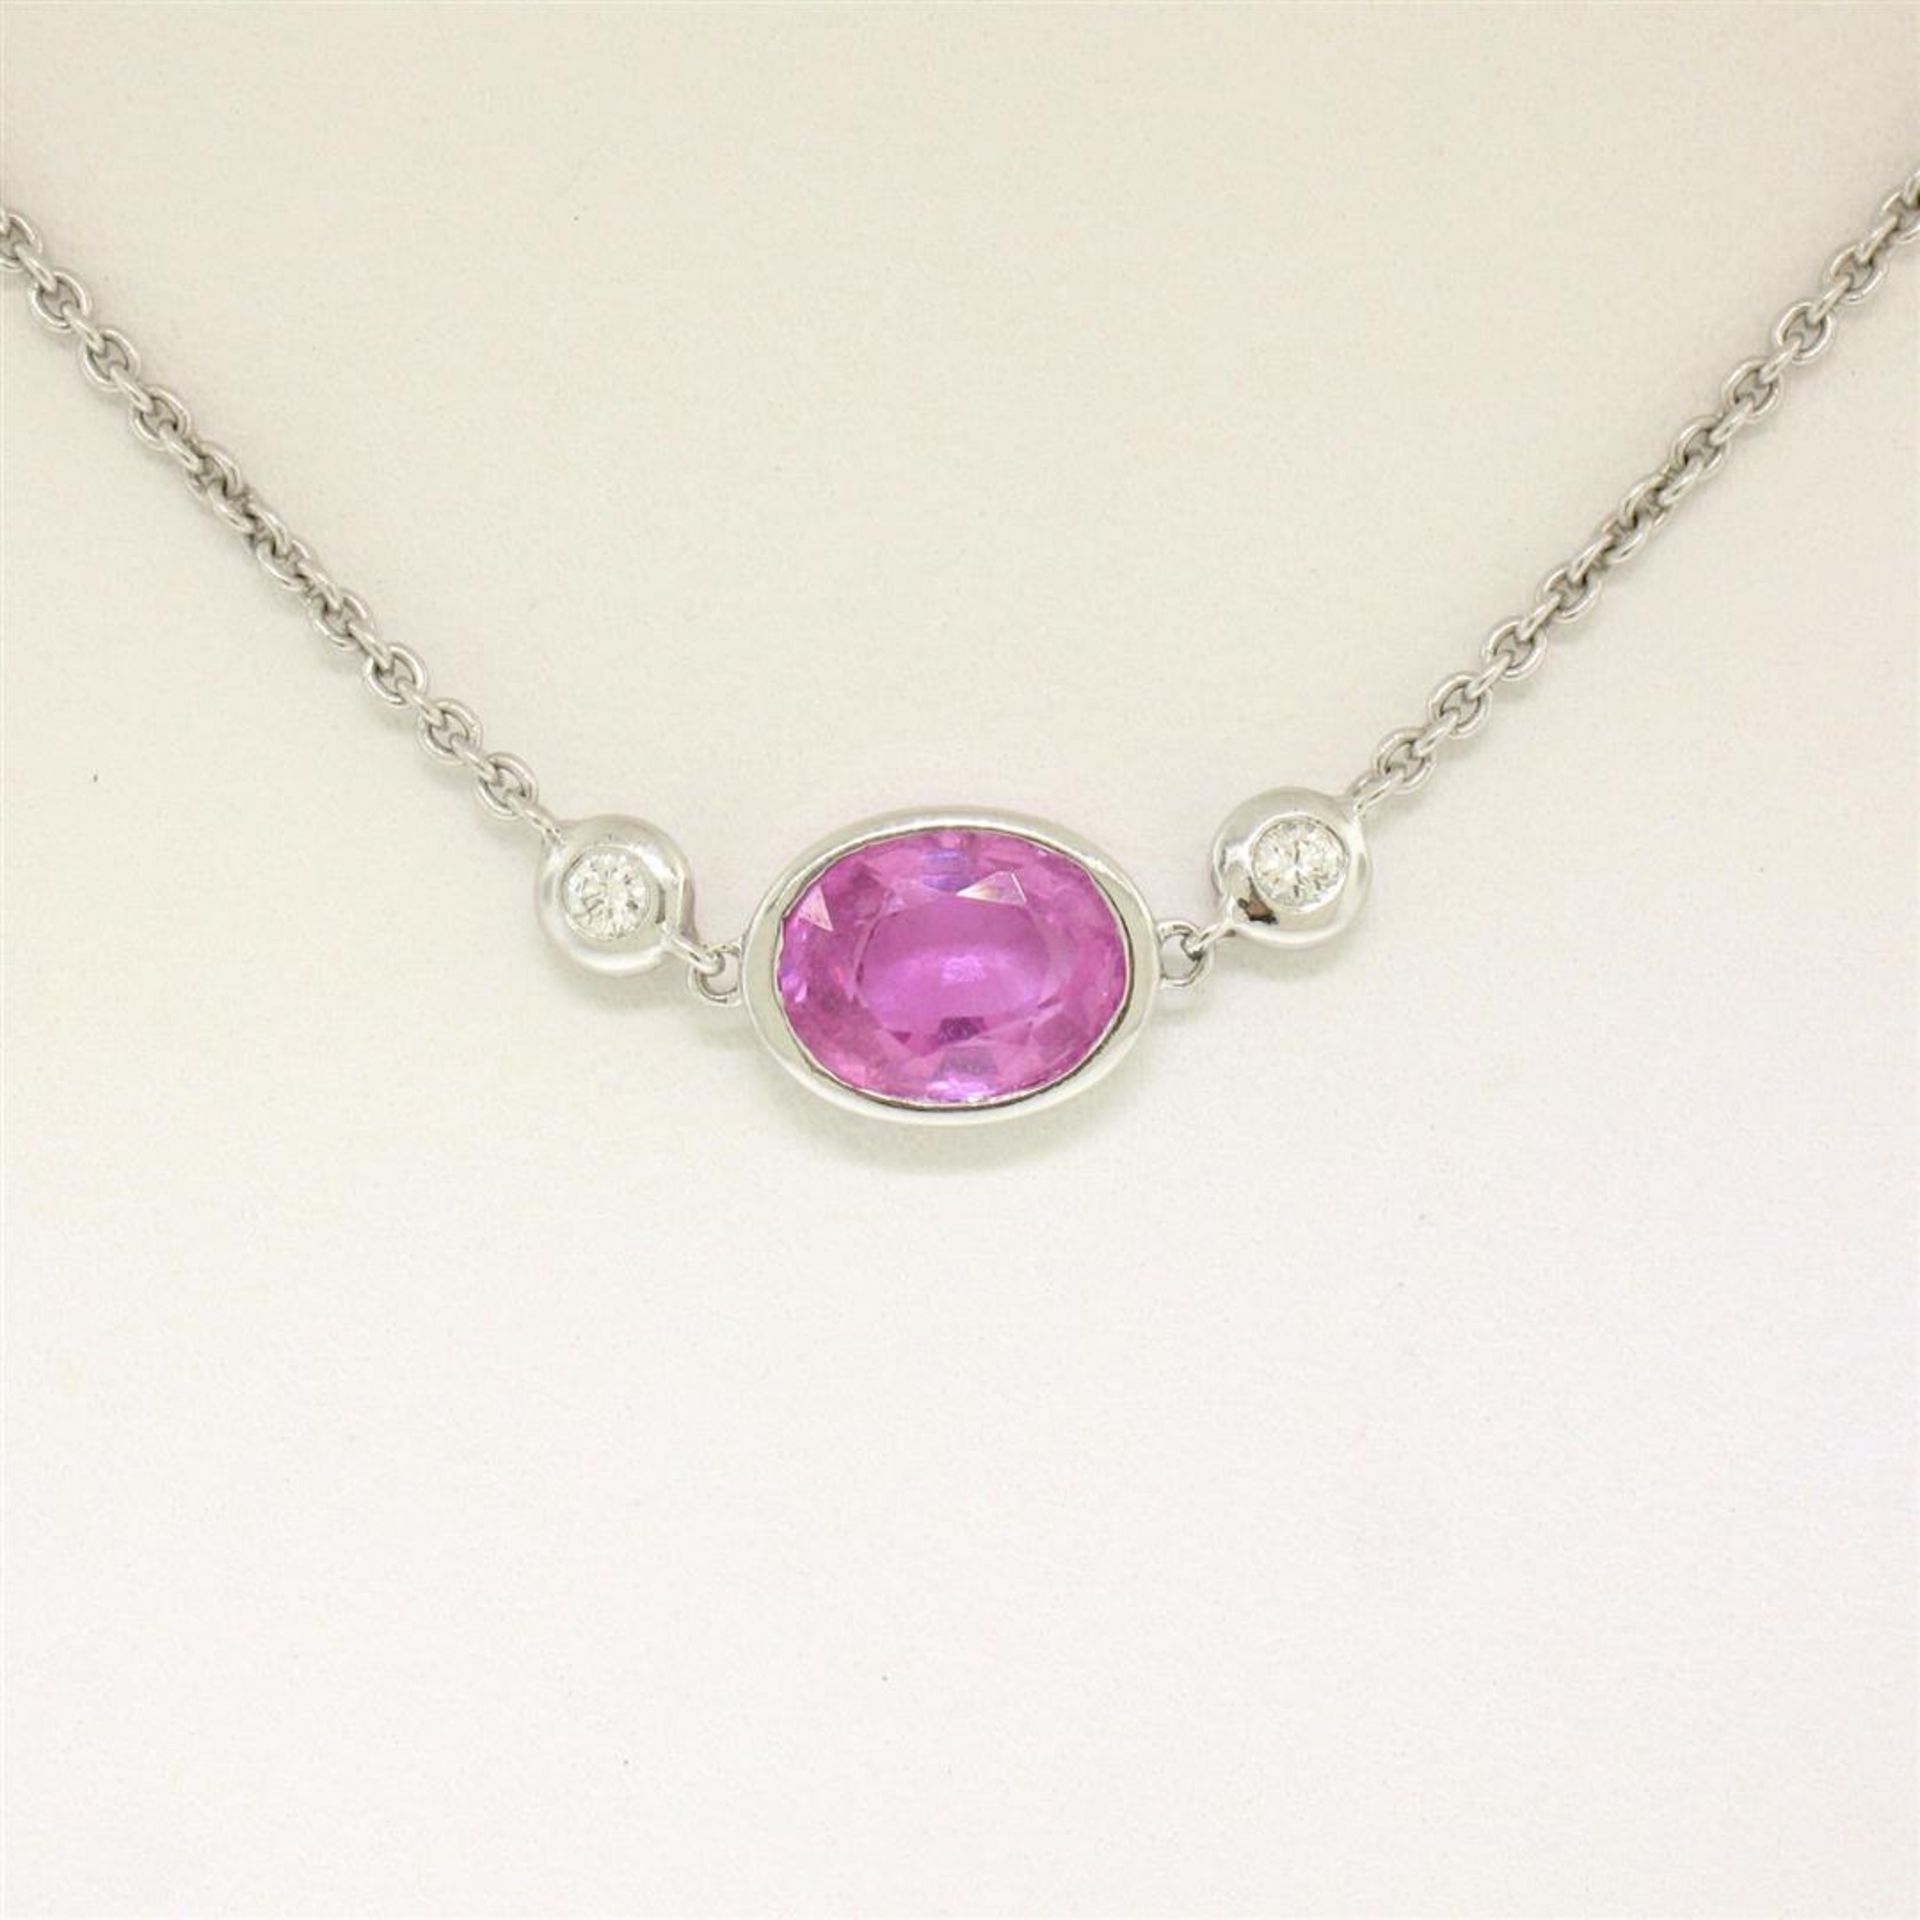 18K White Gold 16" 1.37 ctw GIA Pink Sapphire & Diamond Pendant Necklace - Image 5 of 9